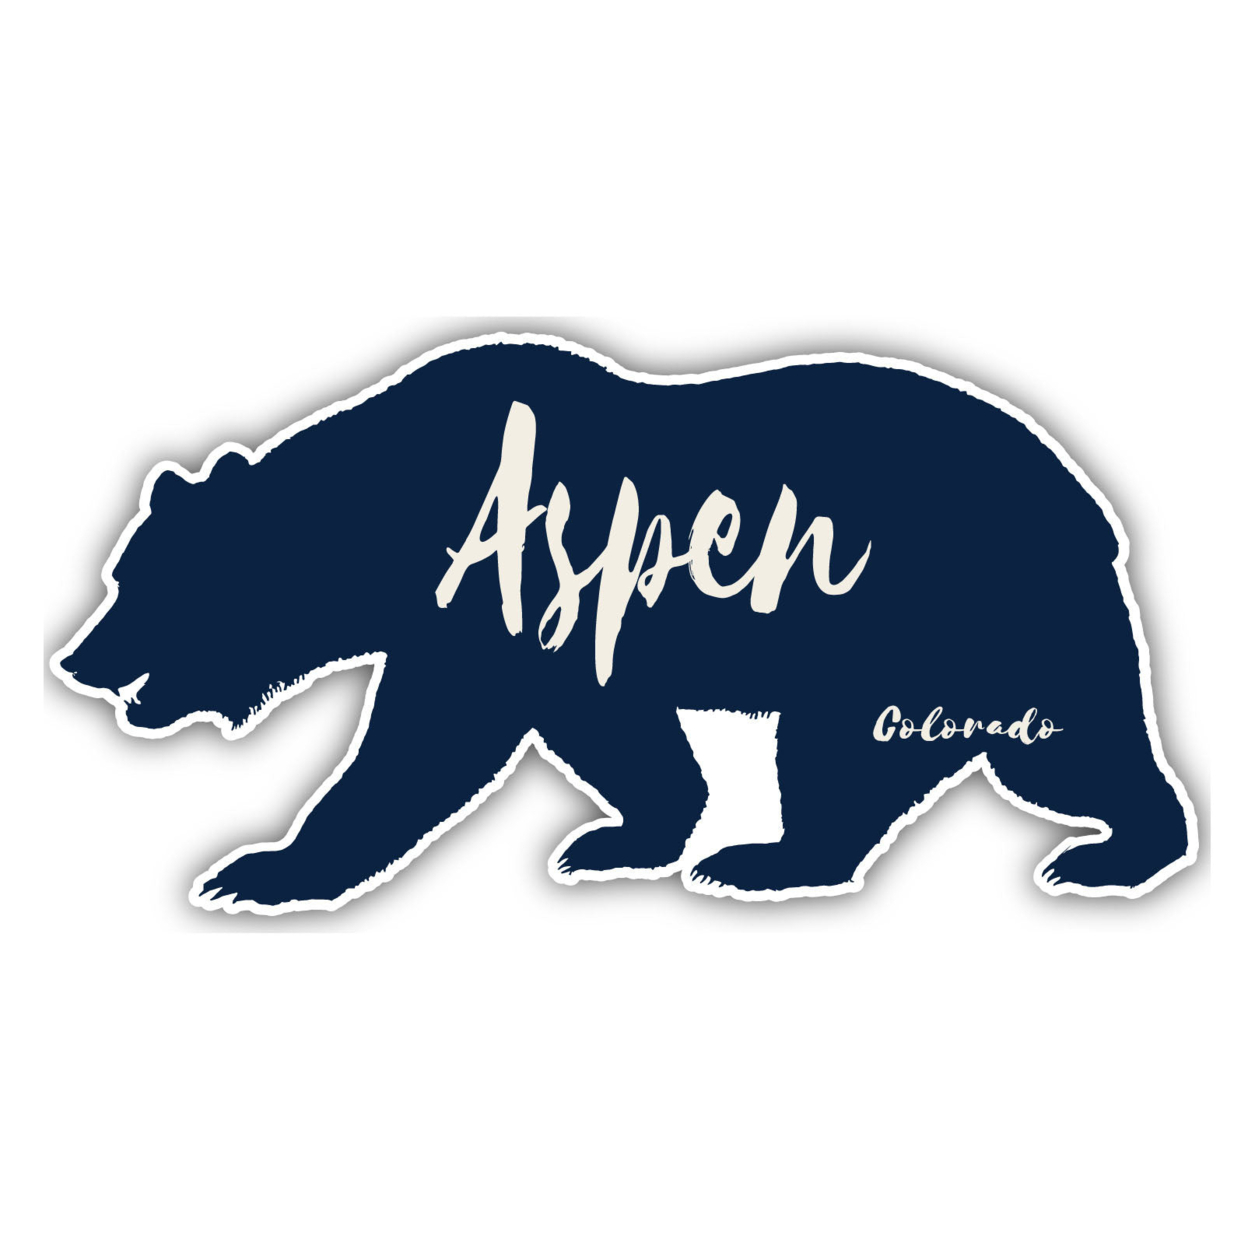 Aspen Colorado Souvenir Decorative Stickers (Choose Theme And Size) - 4-Pack, 2-Inch, Bear